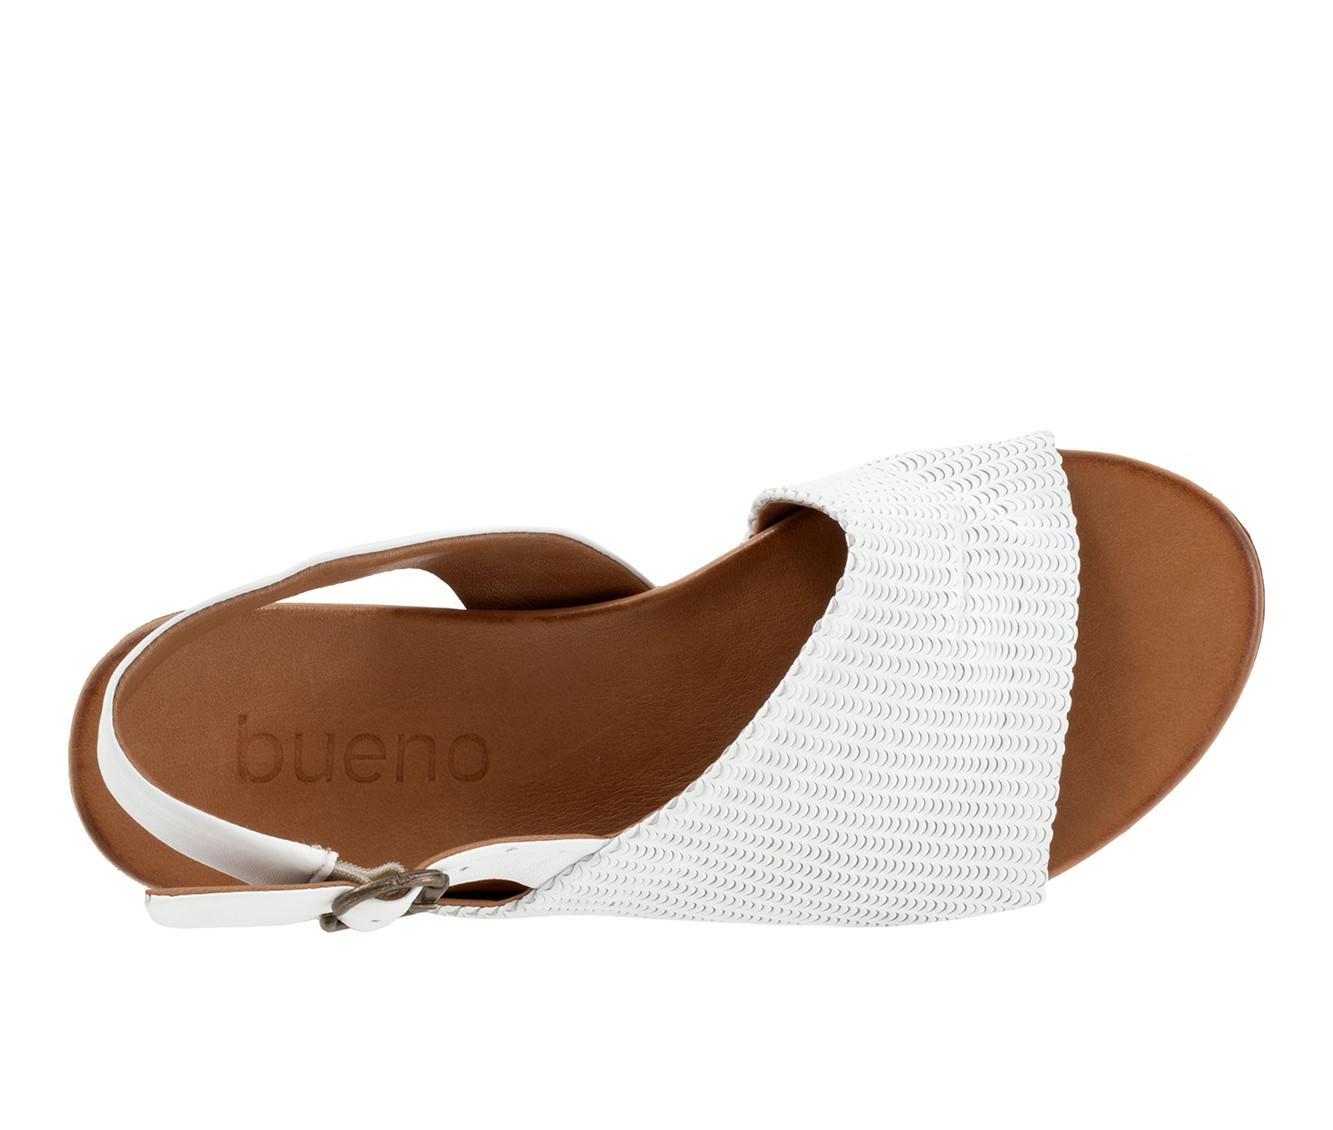 Women's Bueno Tiffany Sandals